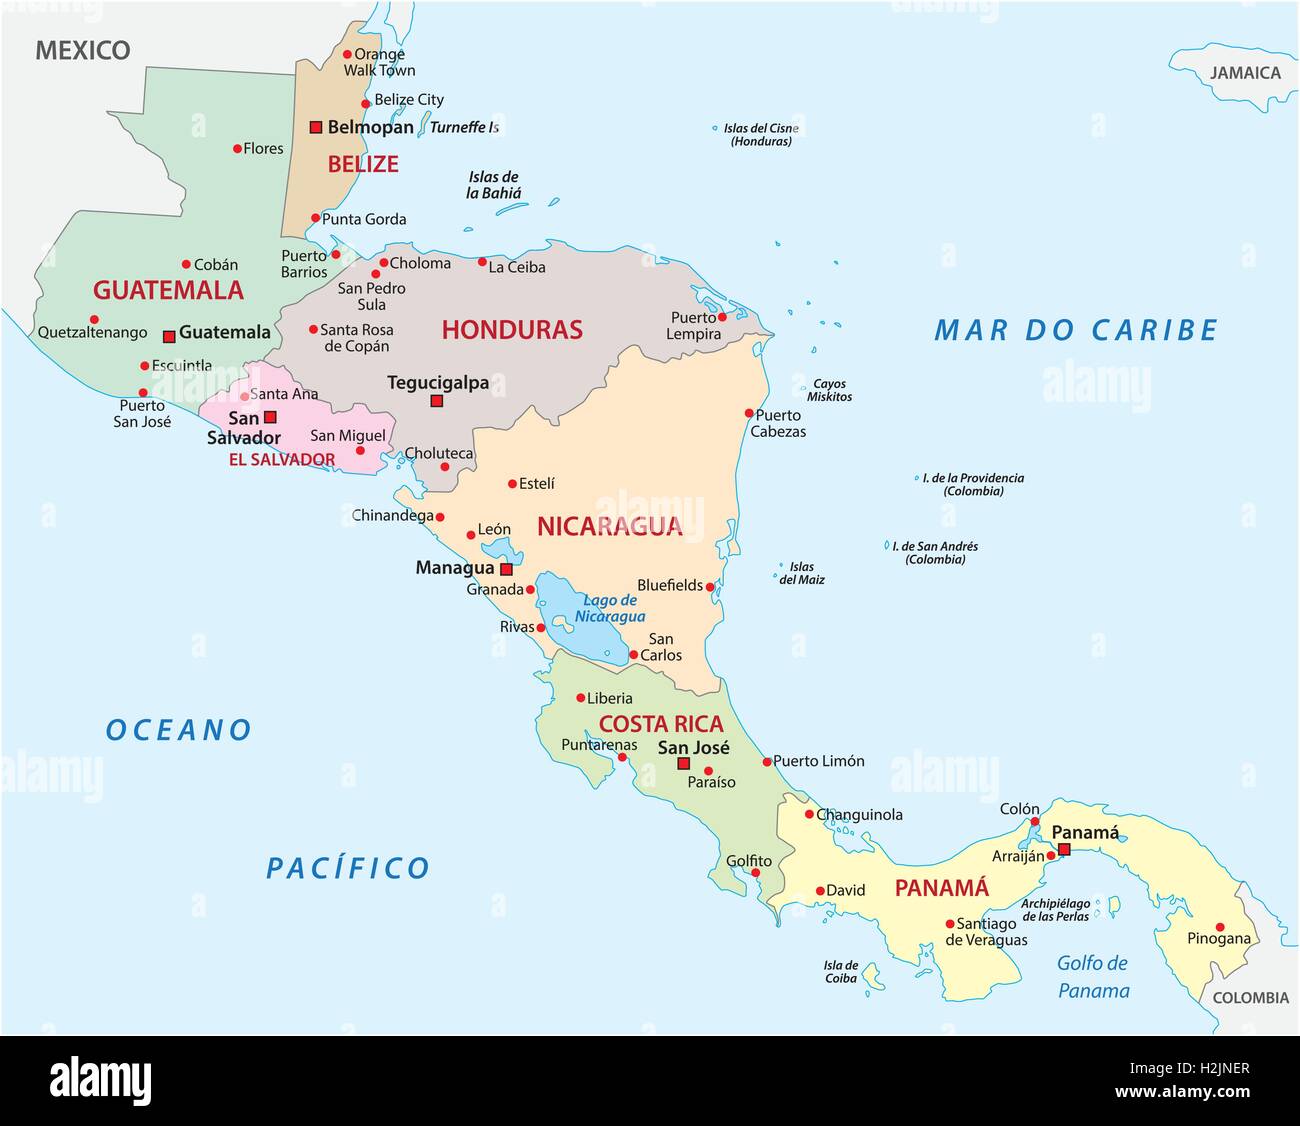 Mapa Politico De Centroamerica Mapa Vectorial Plano Esquematico Images 3897